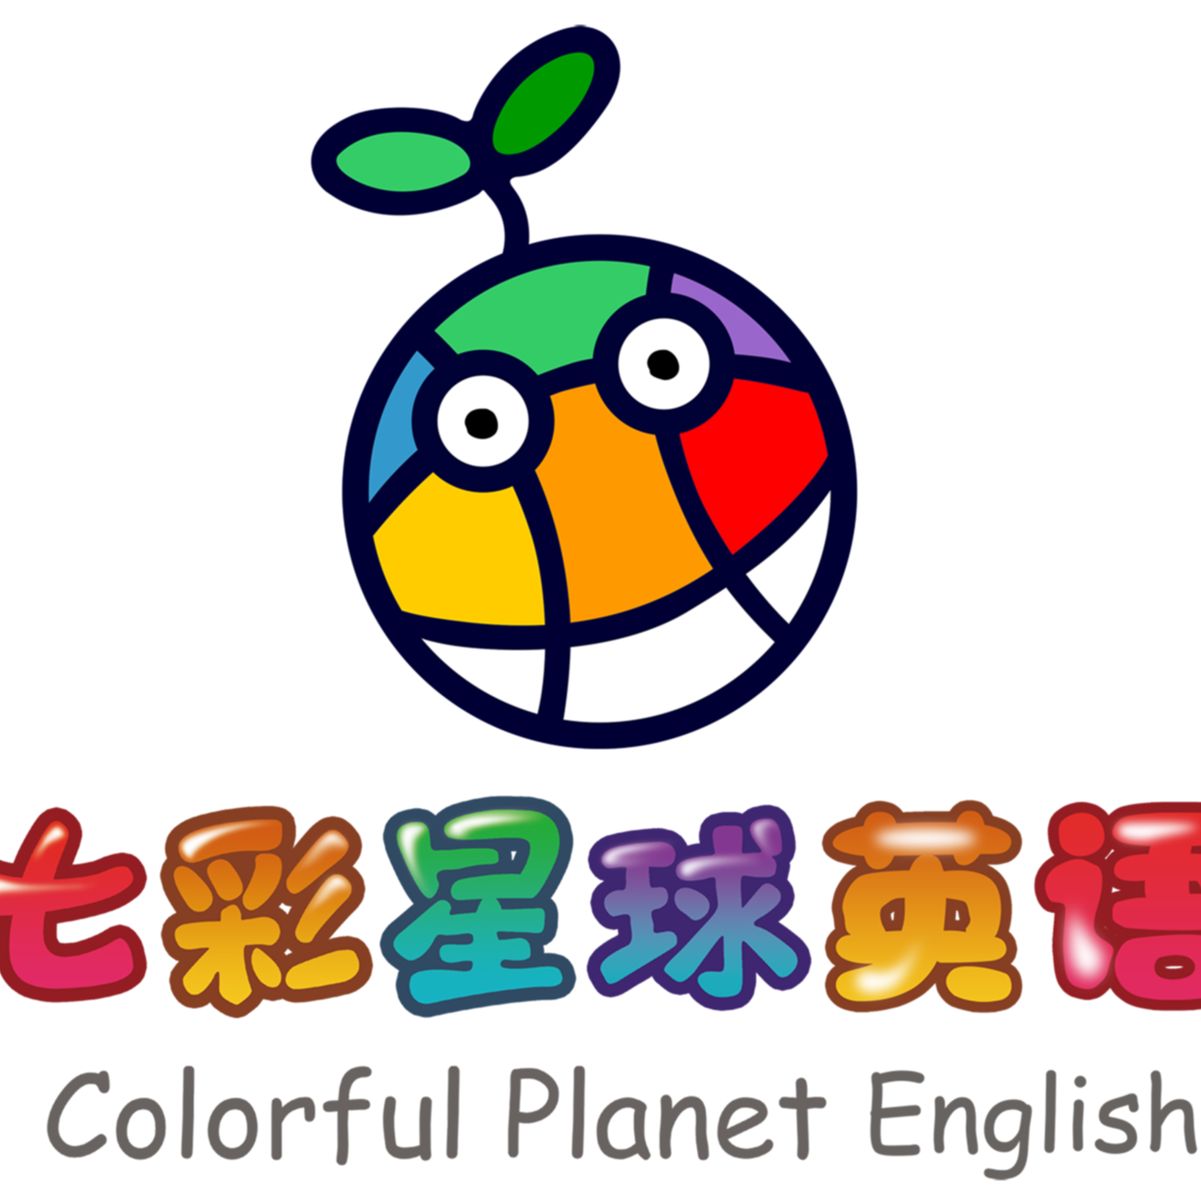 Colorful Planet English Logo